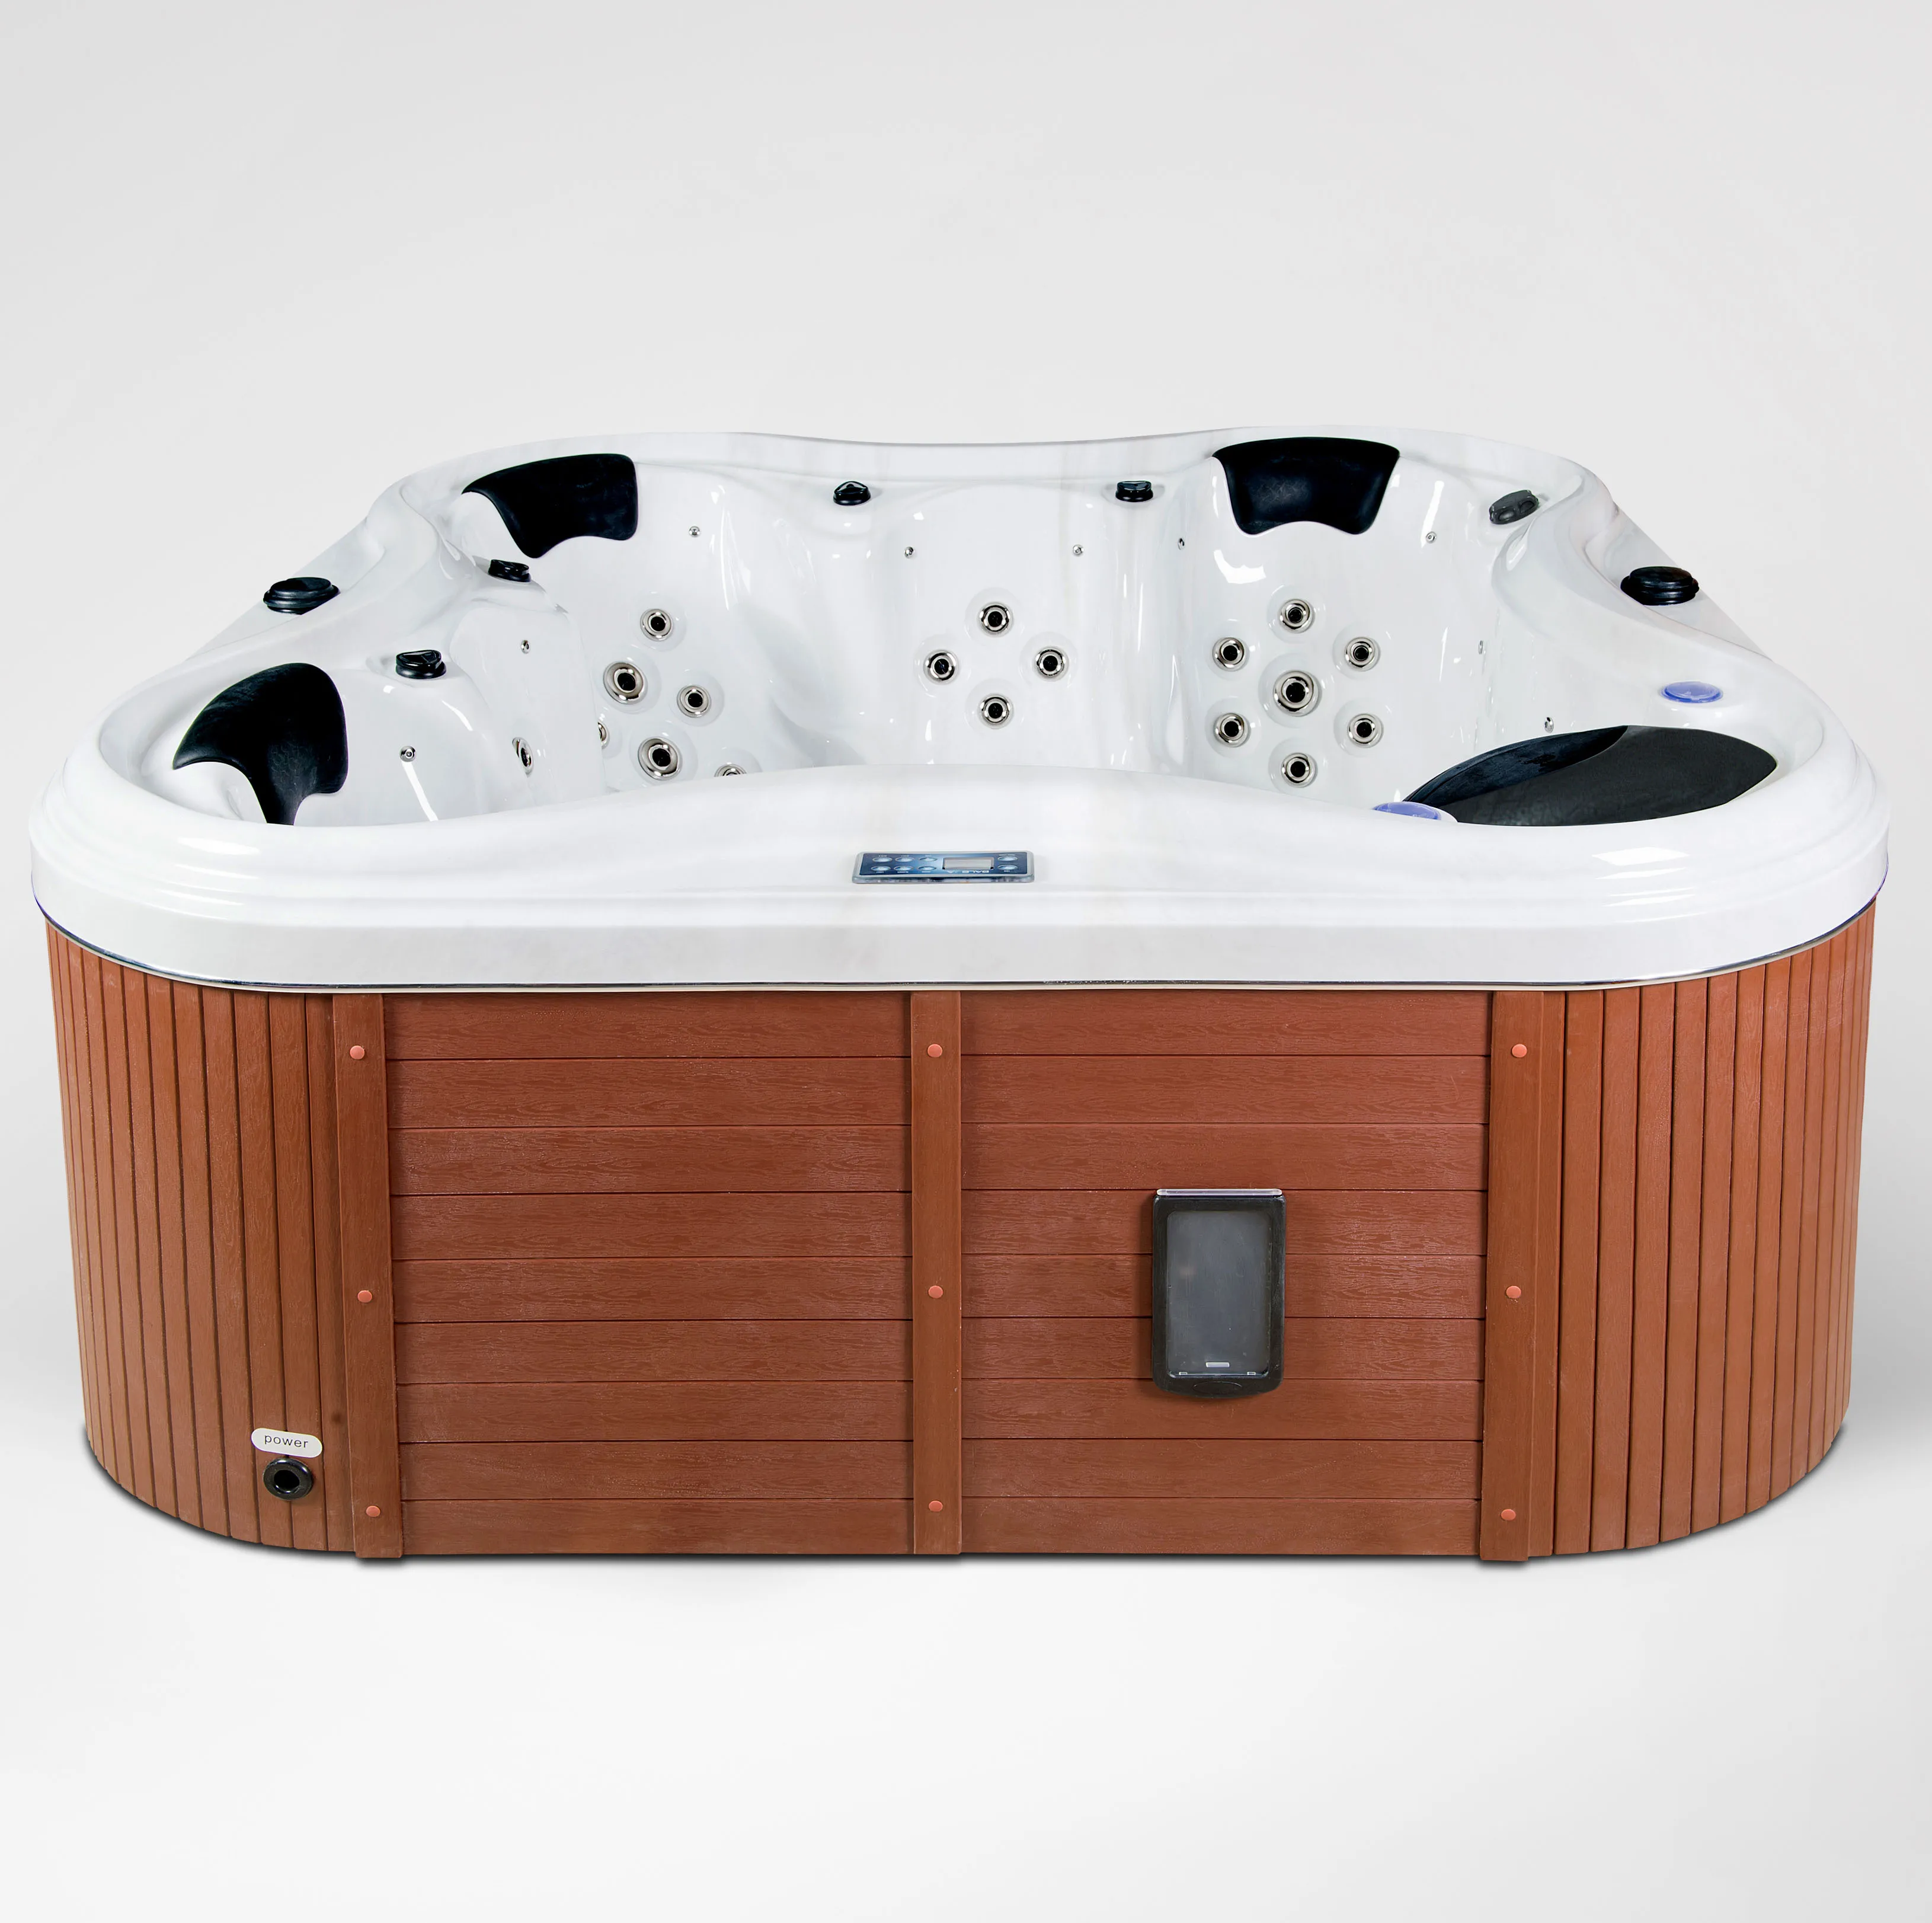 Us Balboa Spa Price 5person Popular Outdoor Spa Tub 2m Massage Whirlpool Hot Tub Buy Balboa